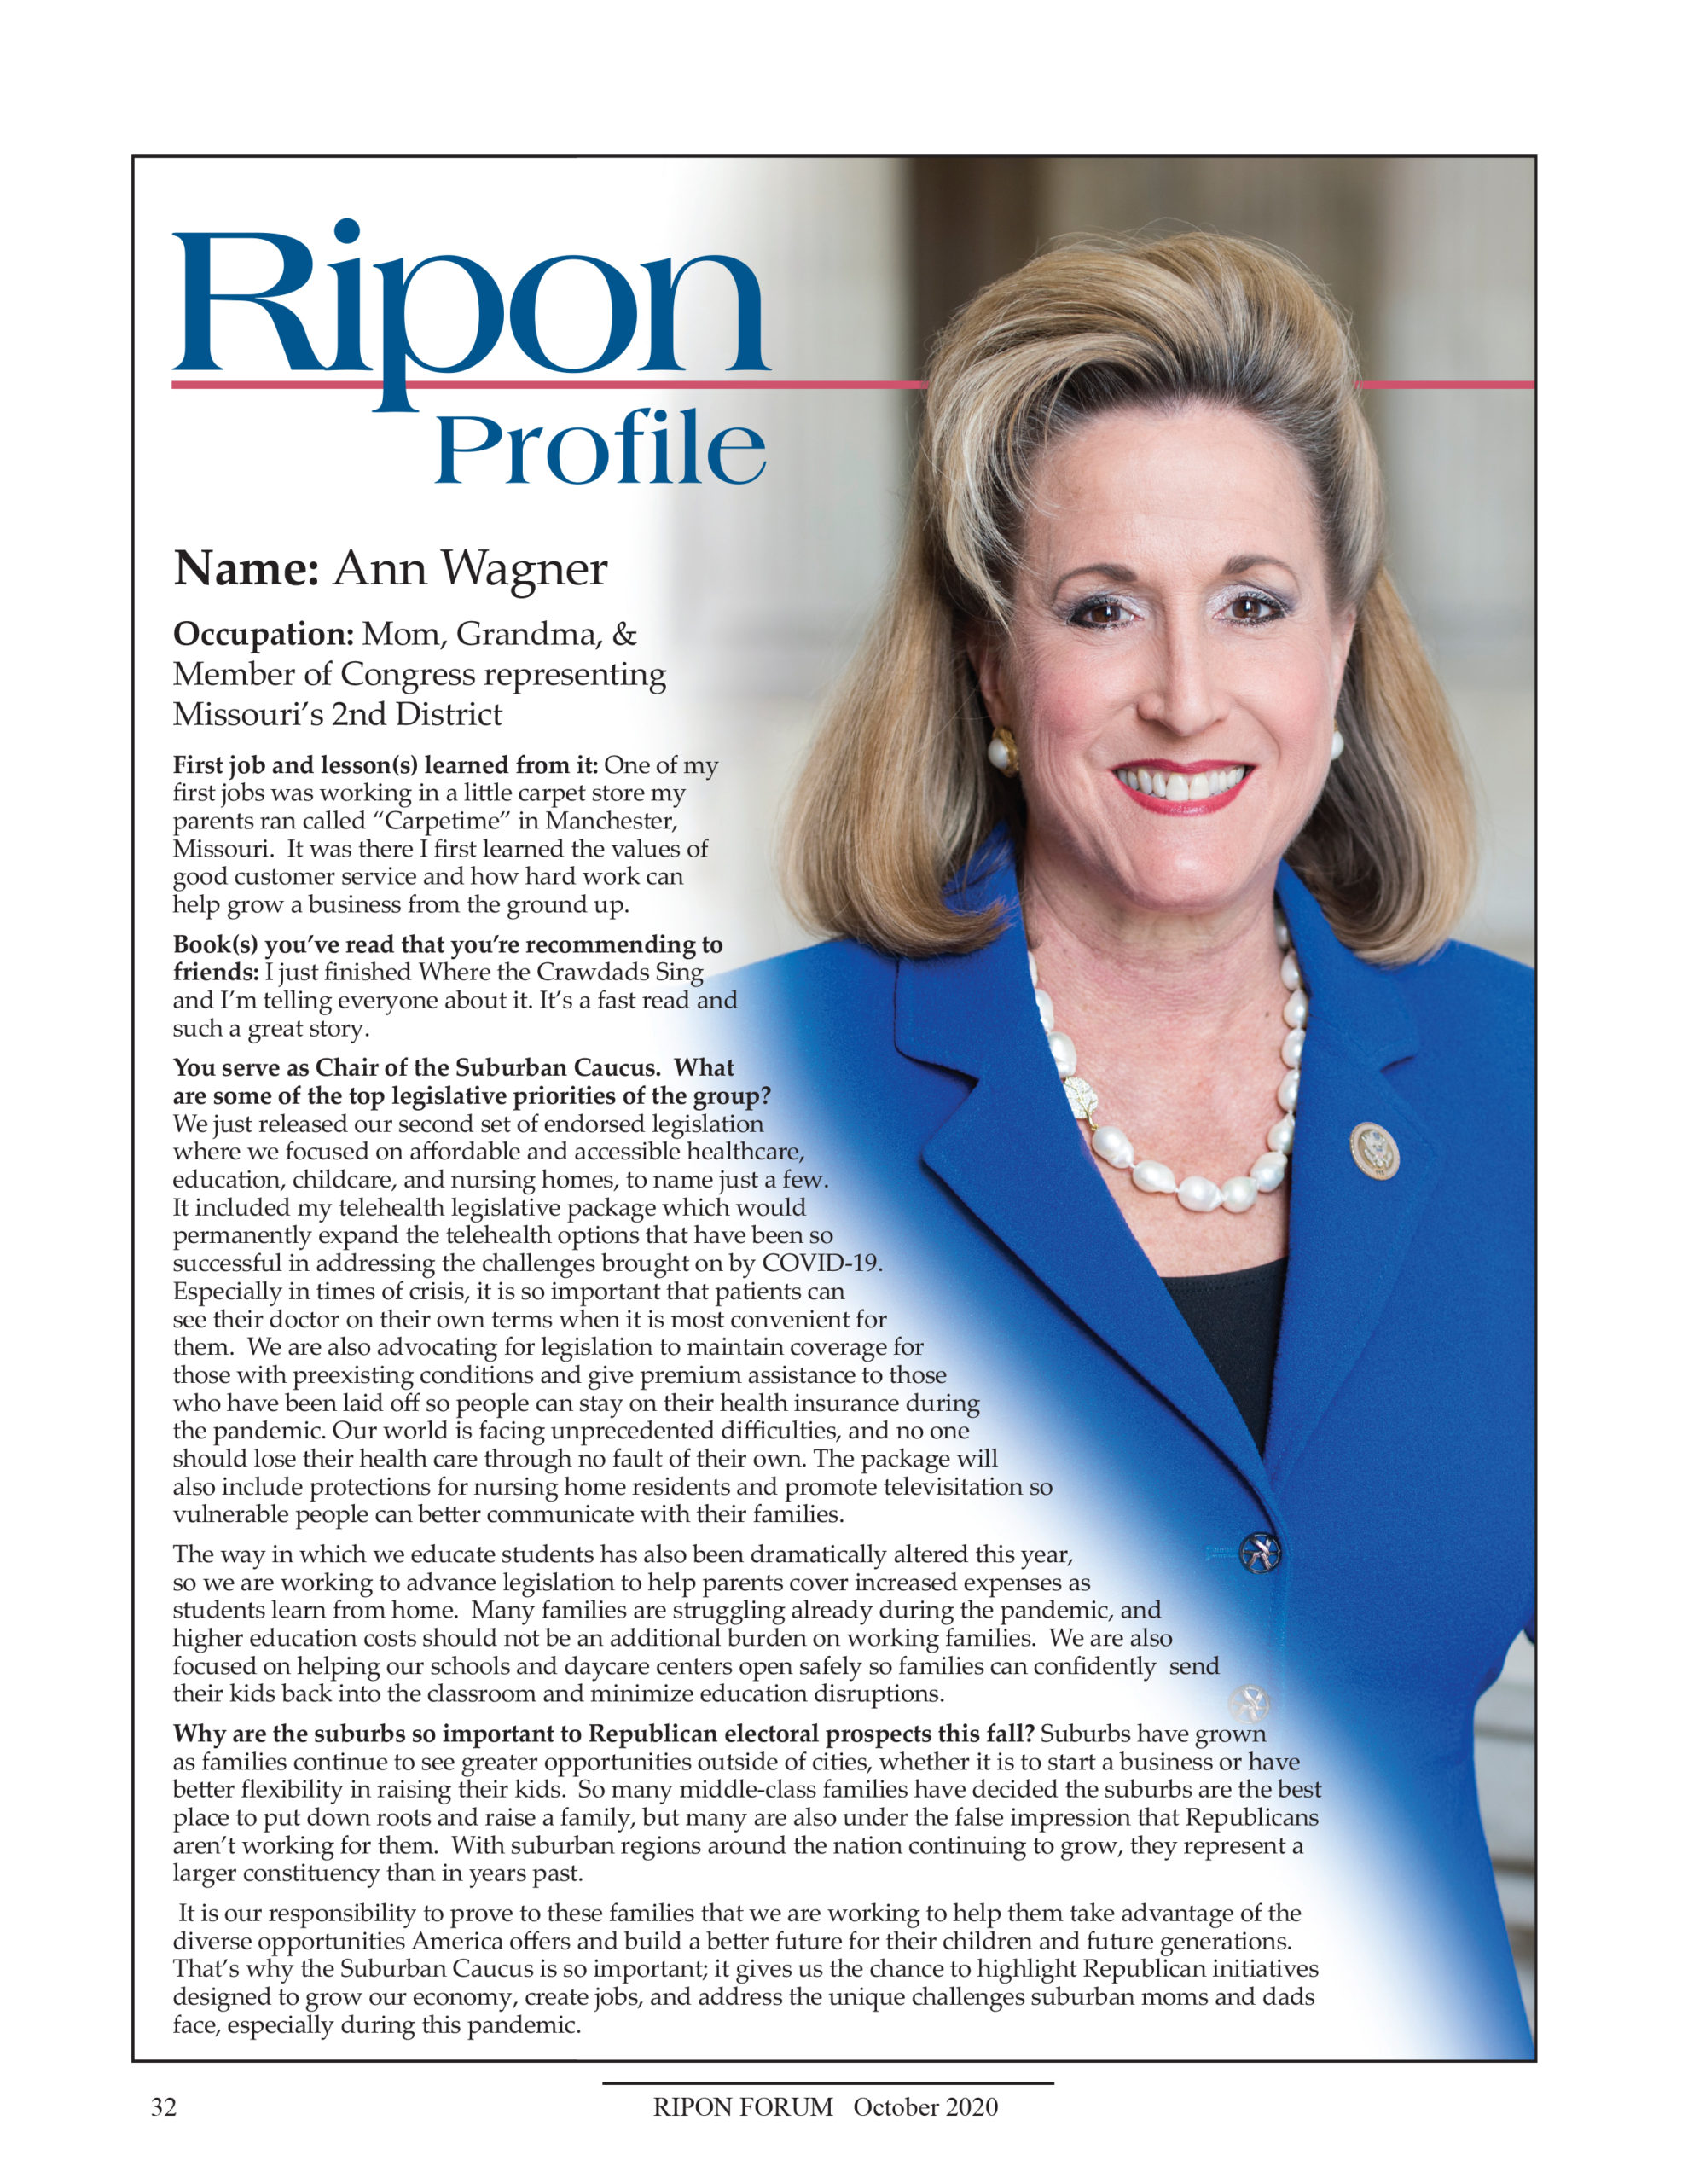 Ripon Profile of Ann Wagner